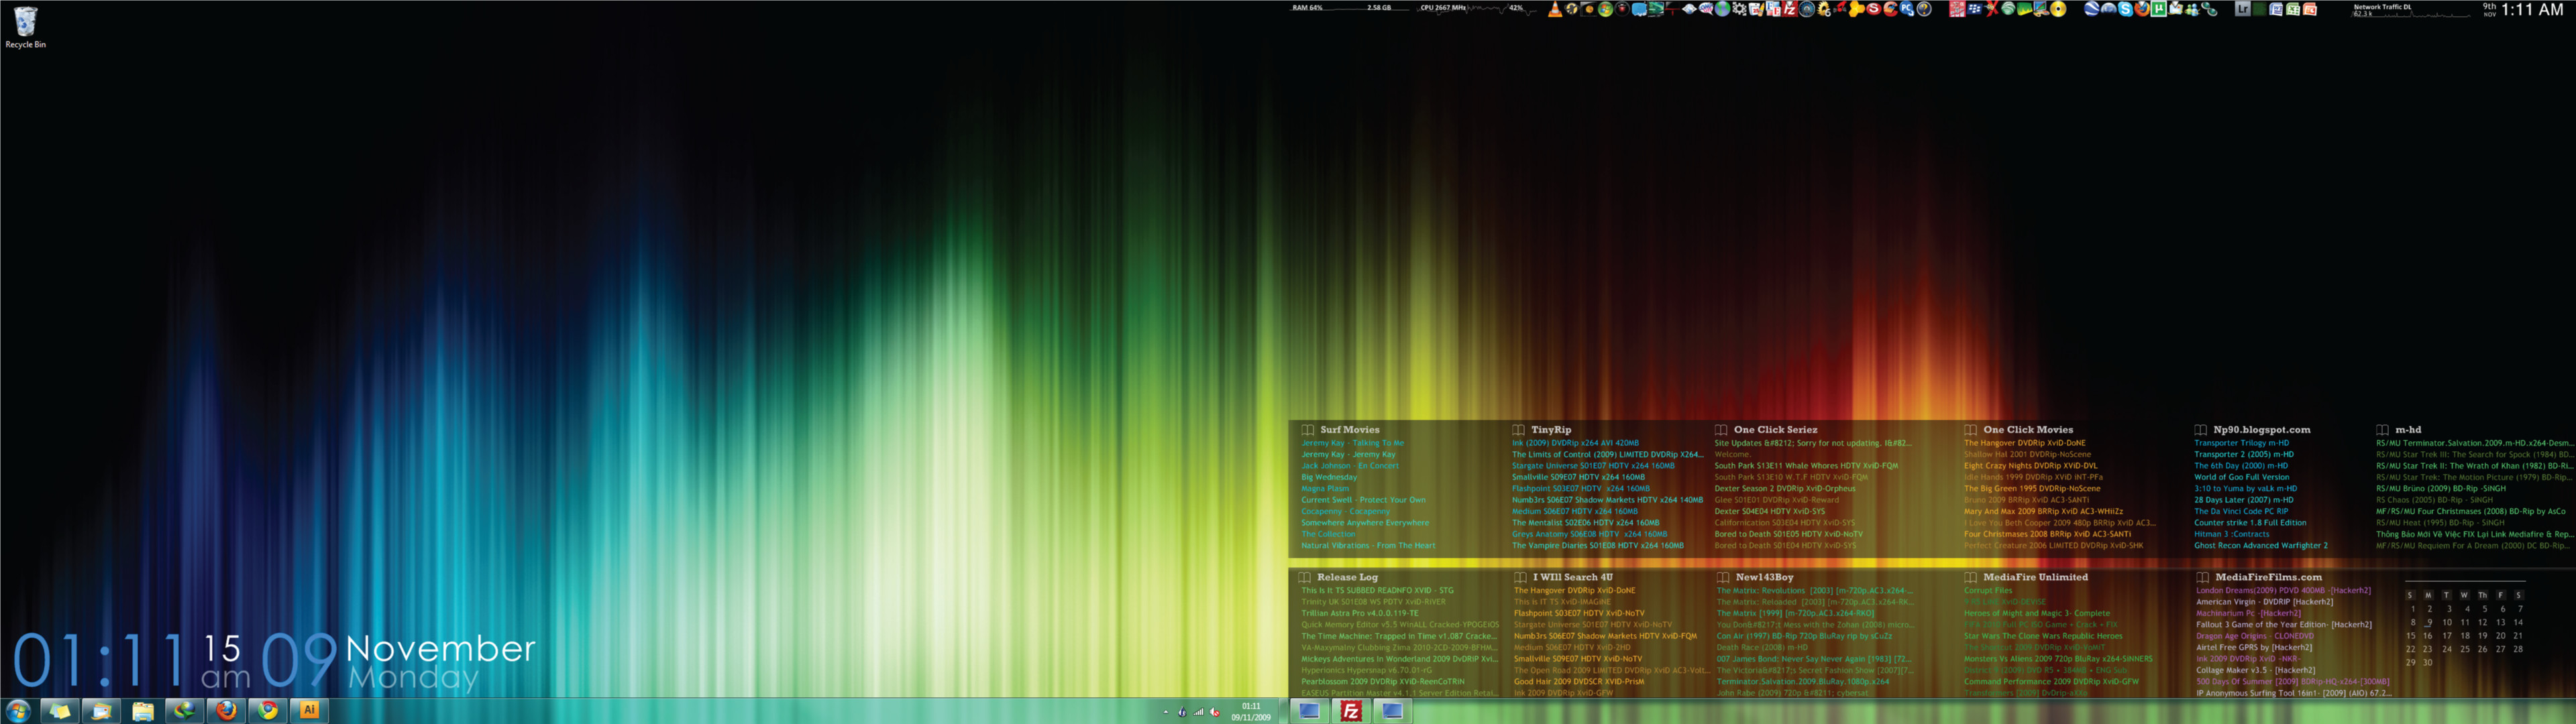 3840x1080 Dual Screen Desktop Windows 7 by bengatley on DeviantArt